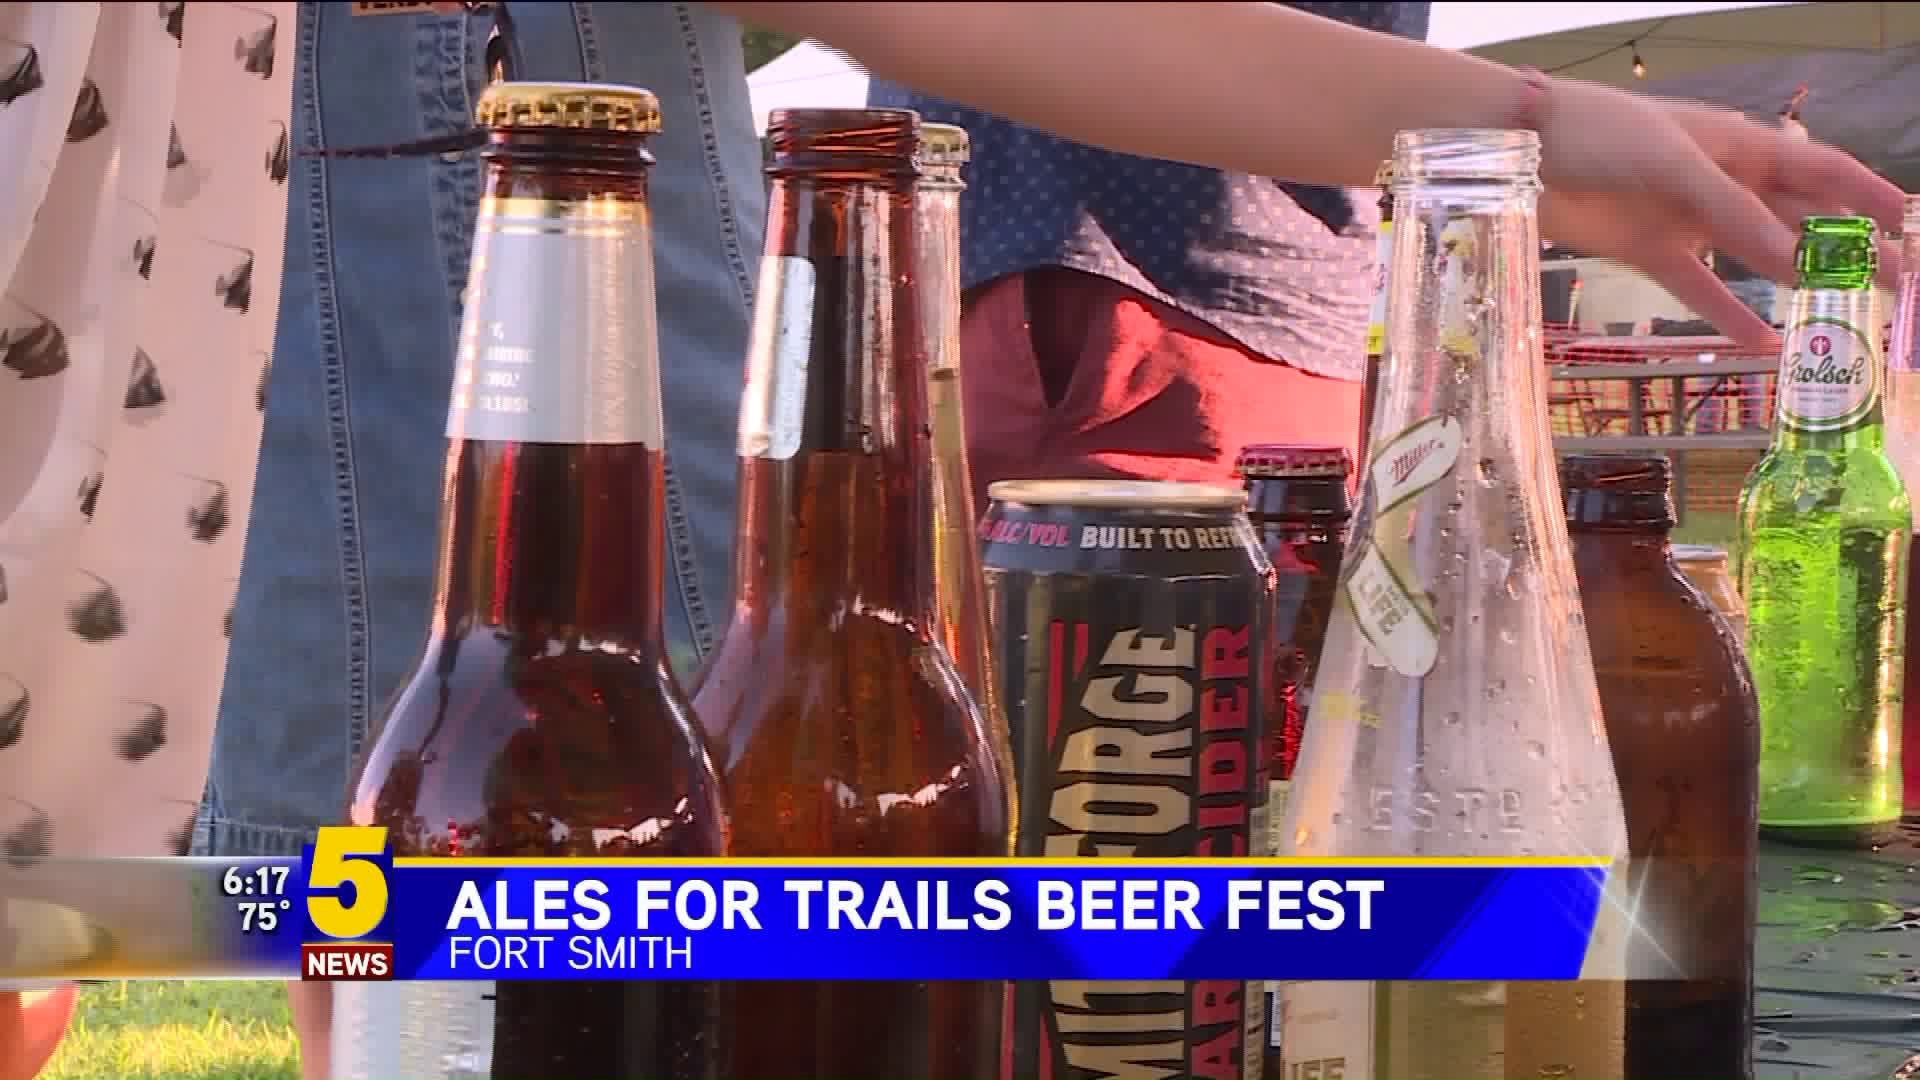 Ales For Trails Beer Fest